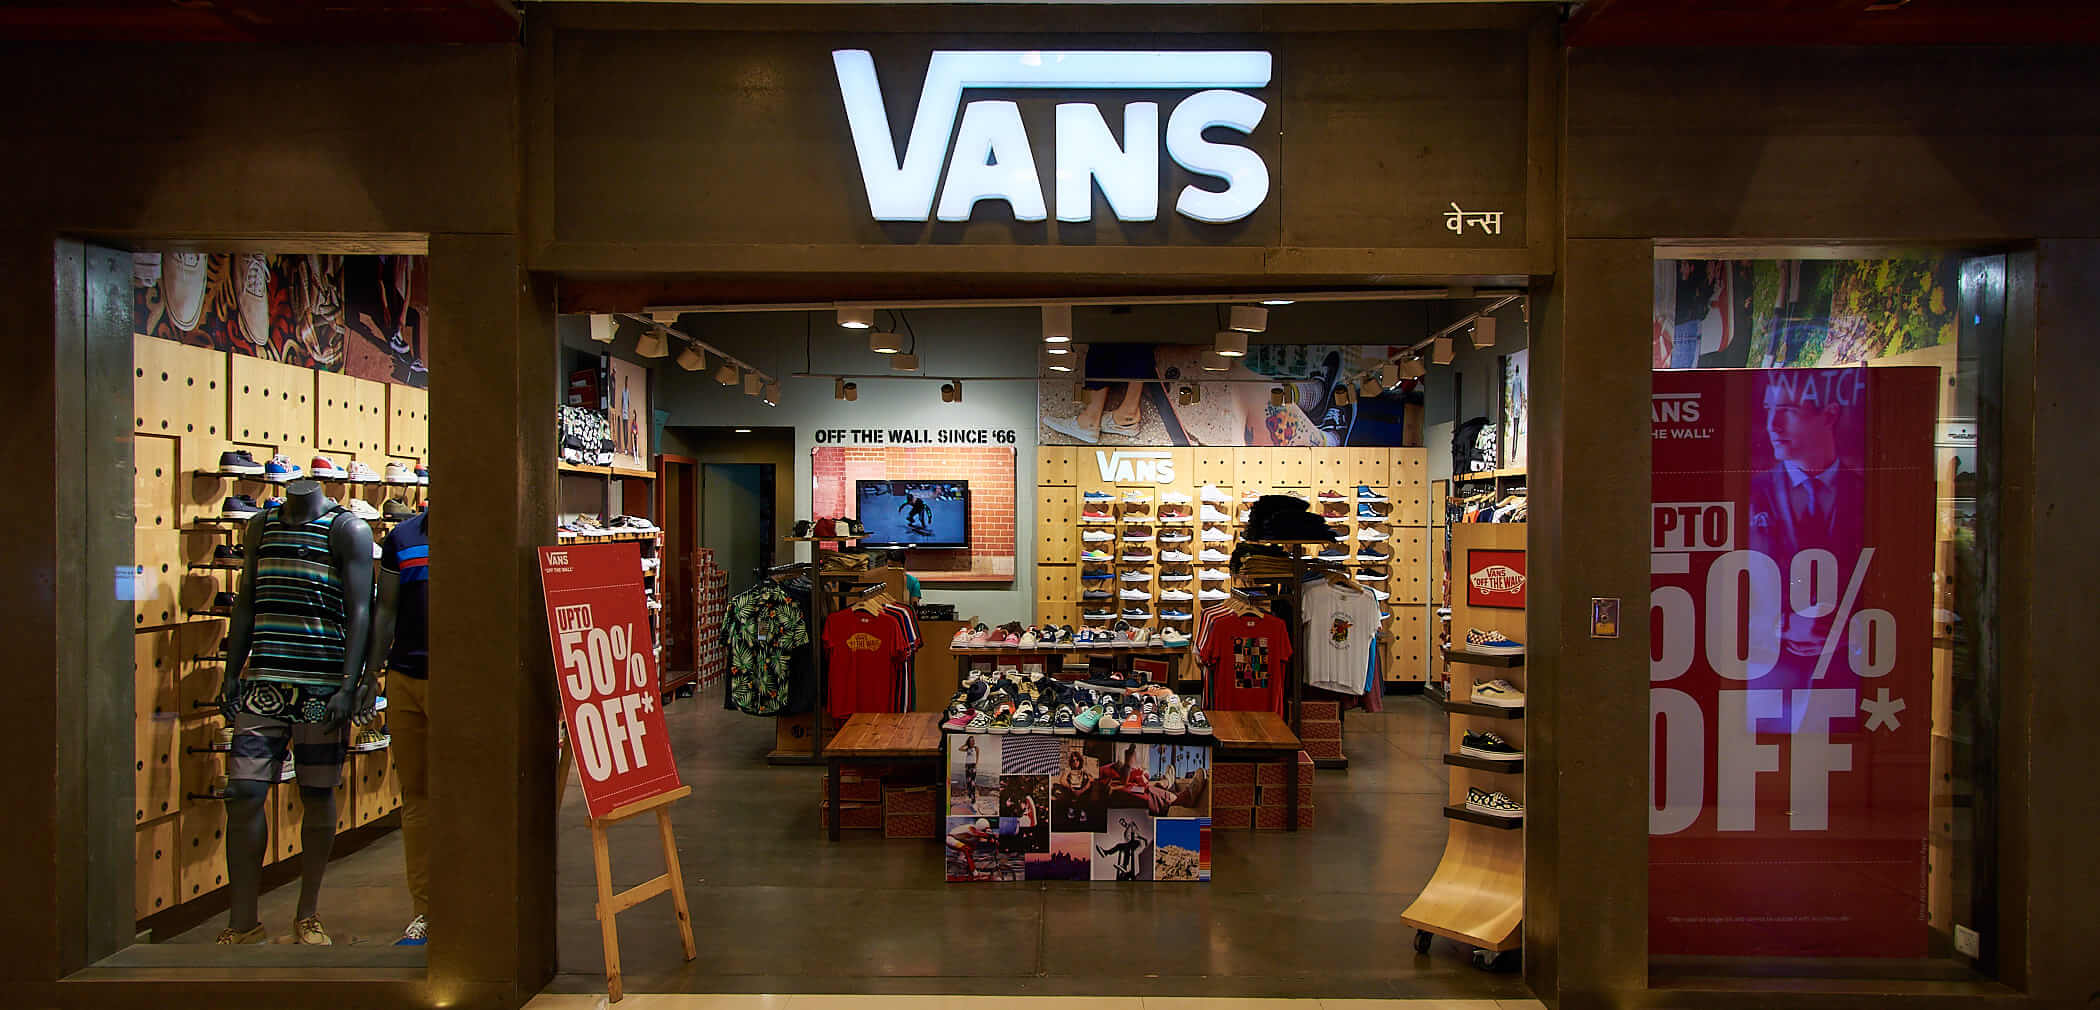 Vans.com/feedback – Win Free Digital Code – Vans Survey